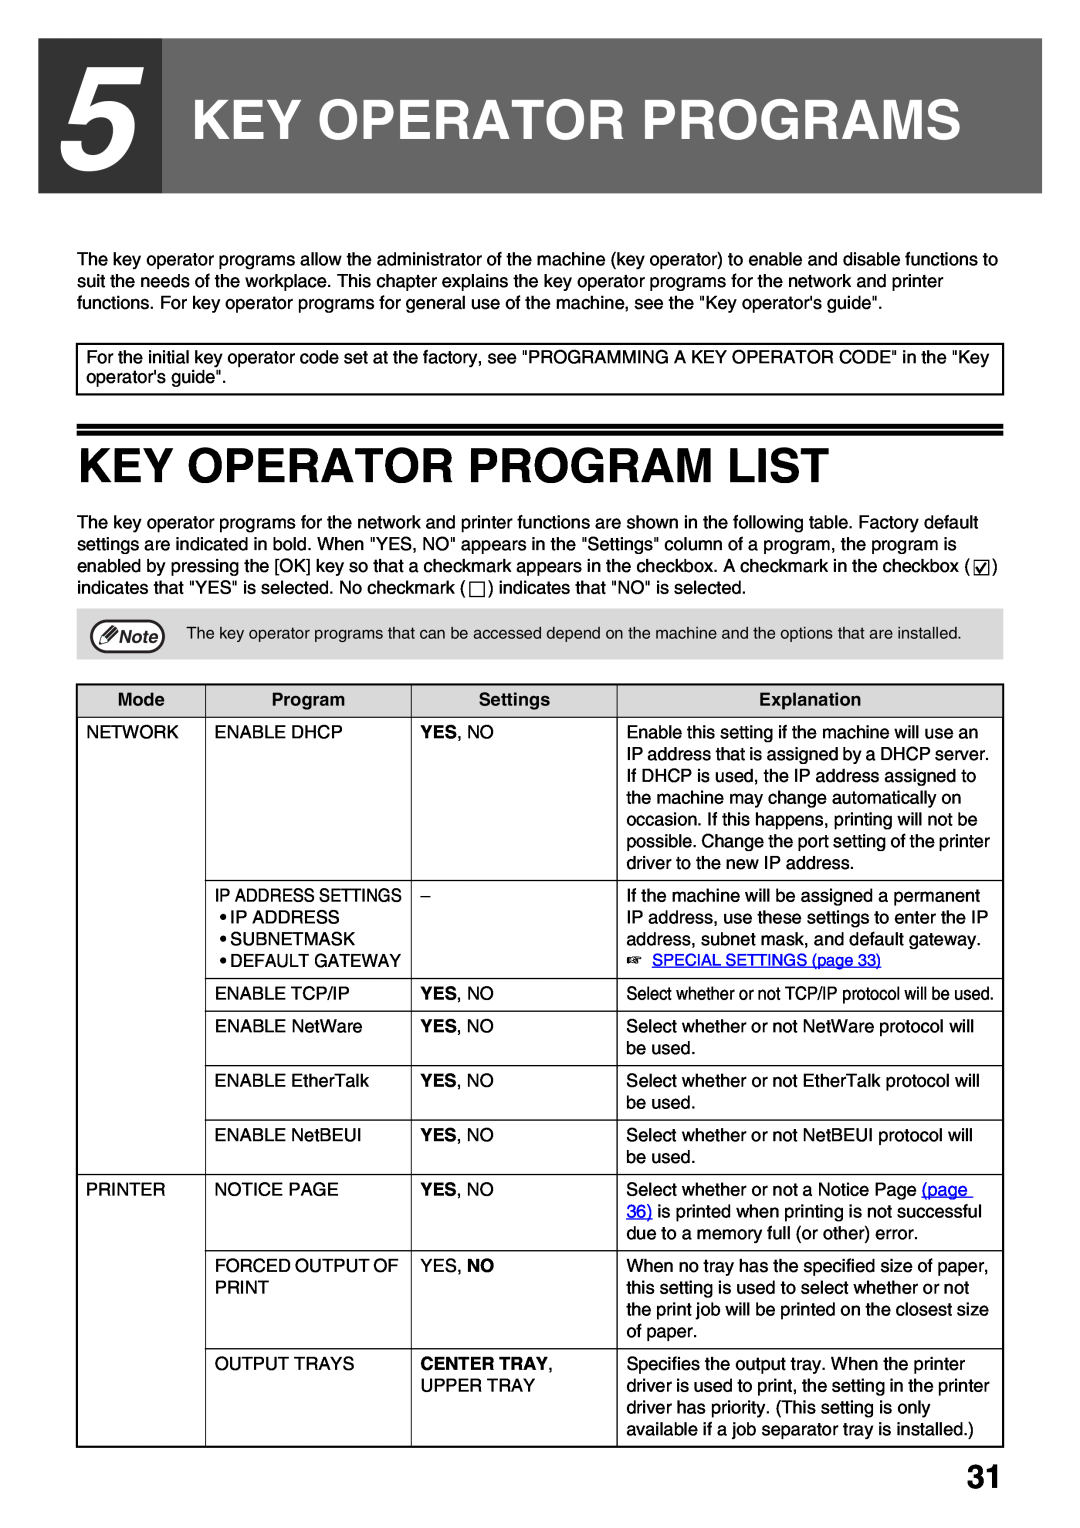 Sharp AR-NB3 operation manual Key Operator Programs, Key Operator Program List 